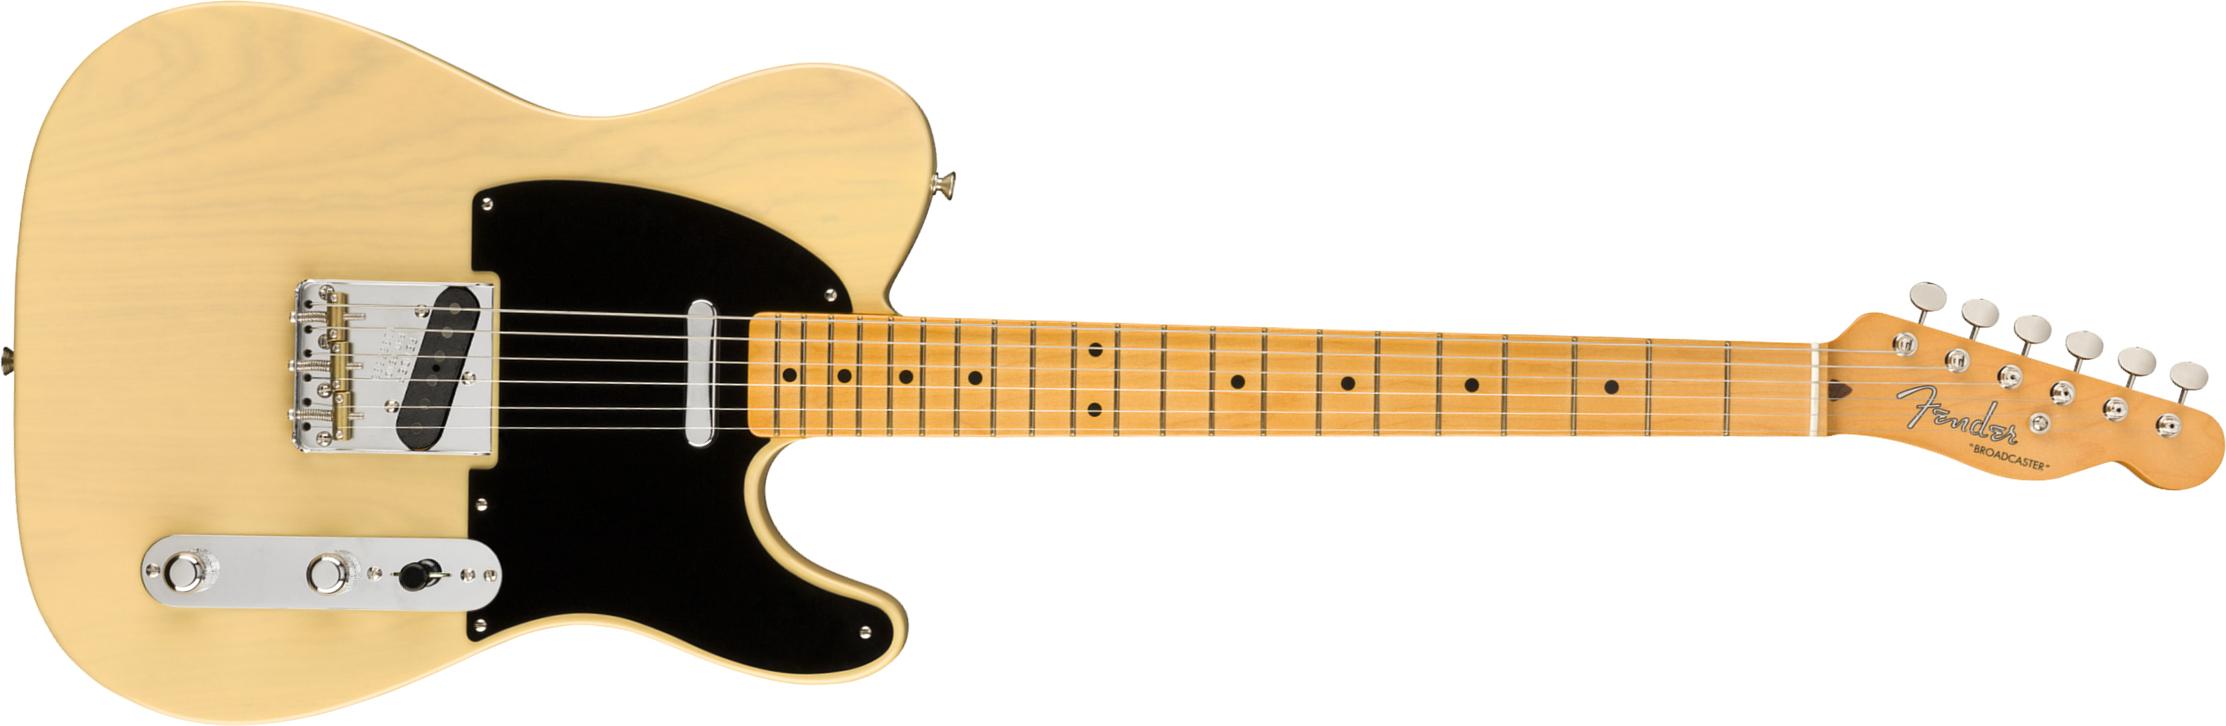 Fender Tele Broadcaster 70th Anniversary Usa Mn - Blackguard Blonde - Guitare Électrique Forme Tel - Main picture